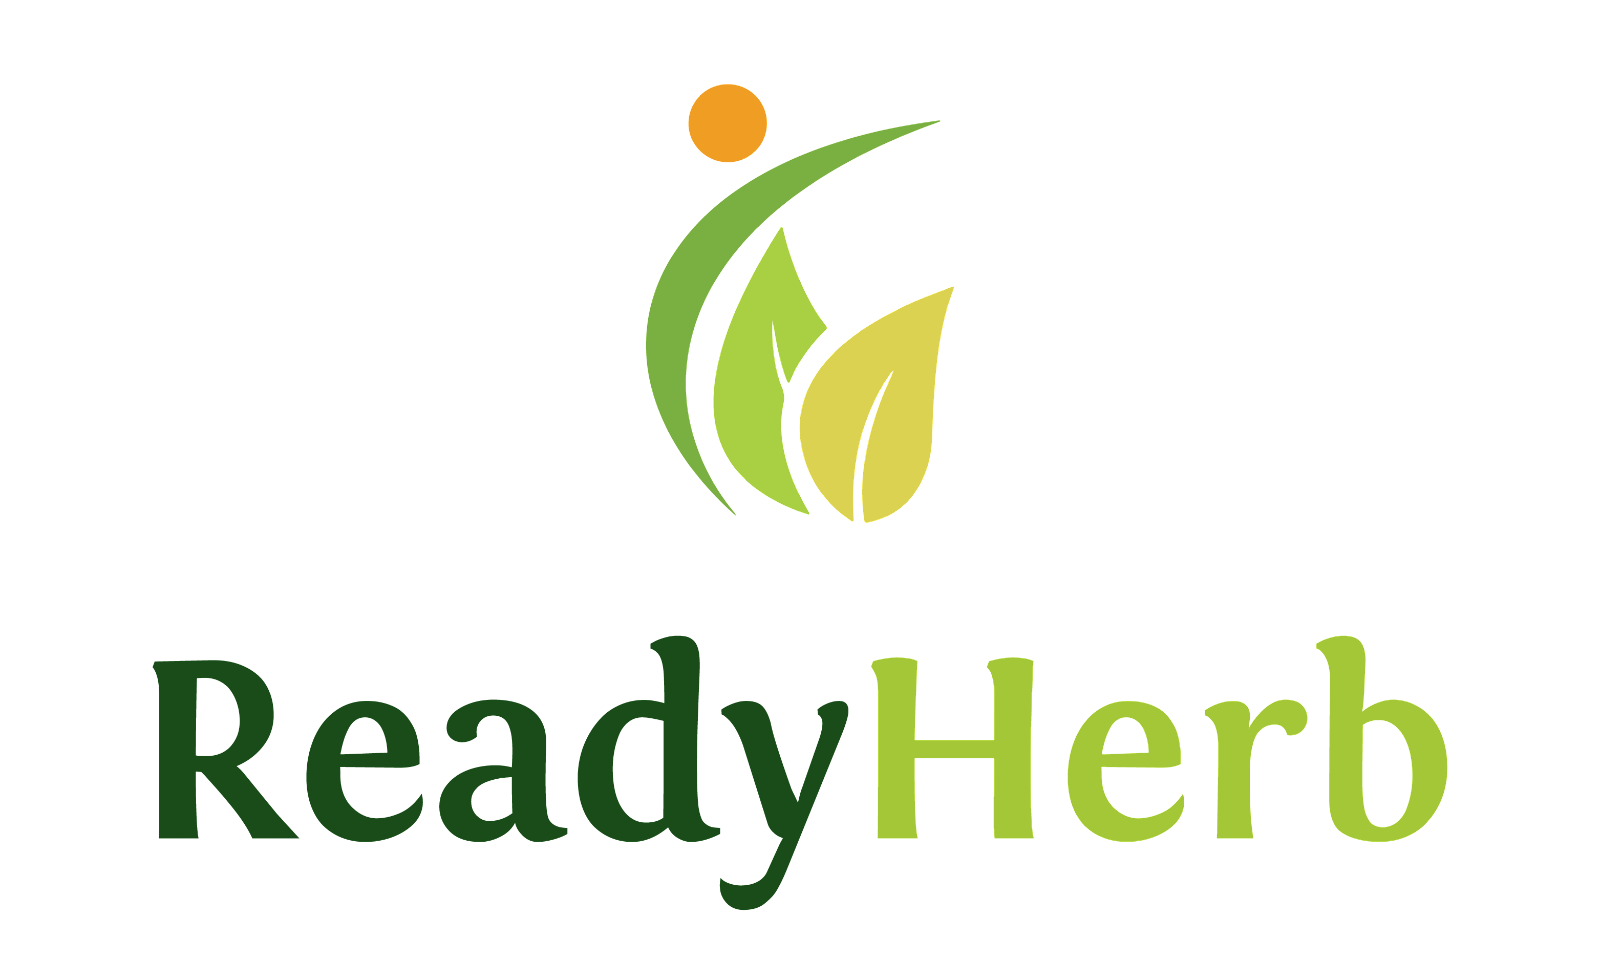 ReadyHerb.com - Creative brandable domain for sale